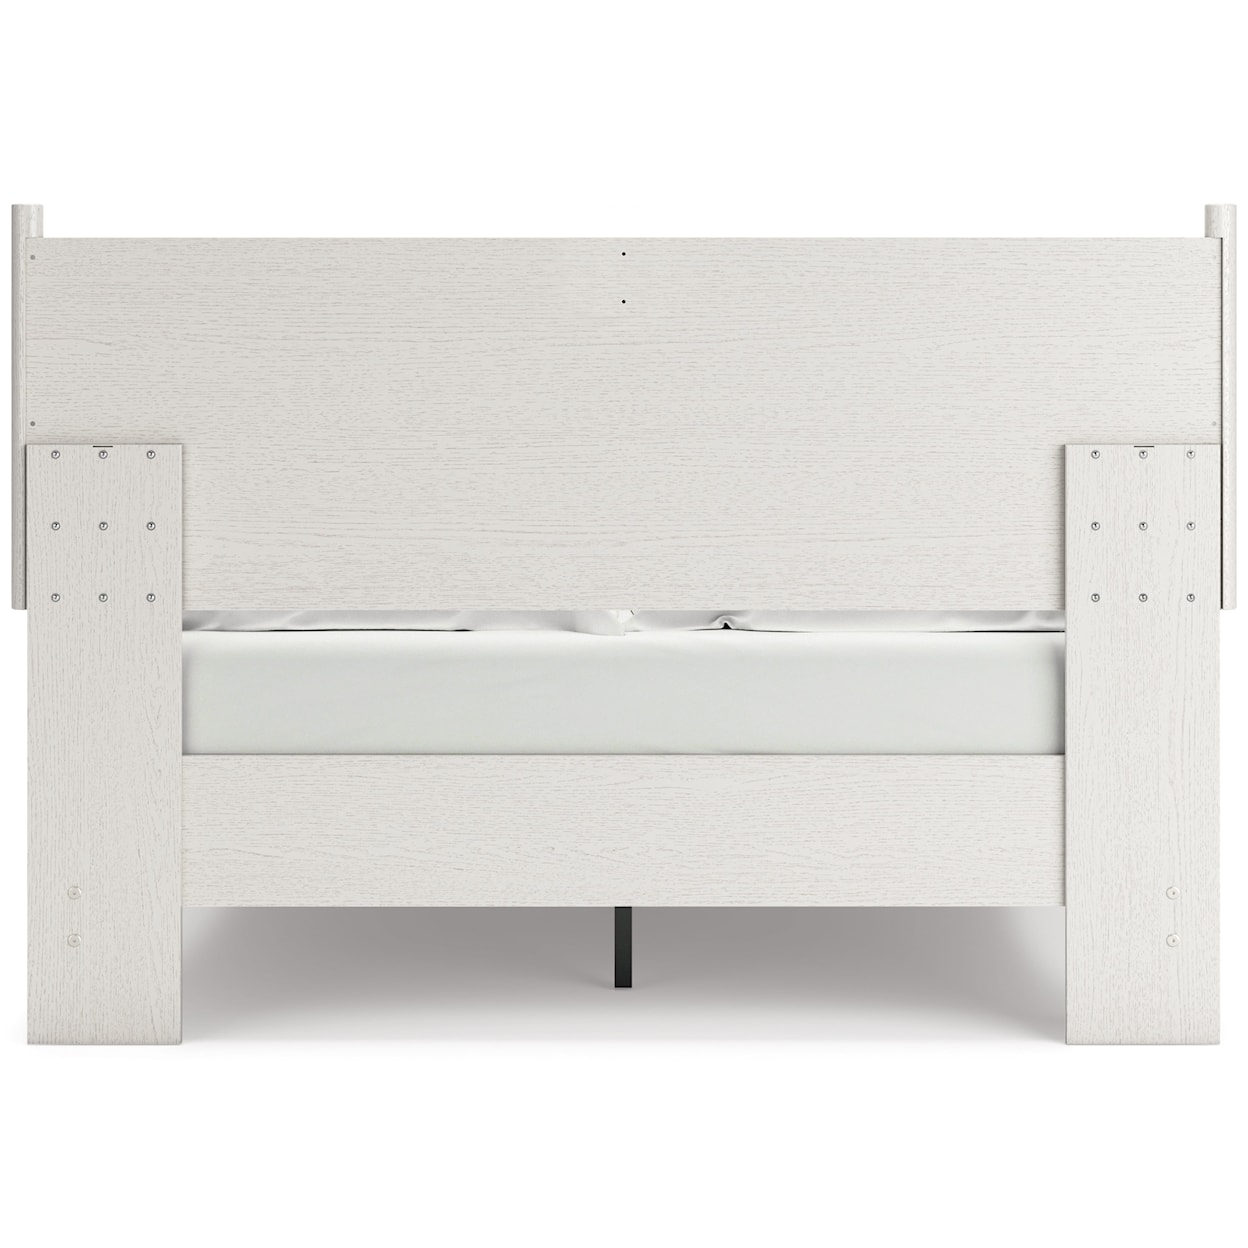 Ashley Furniture Signature Design Aprilyn Queen Panel Bed